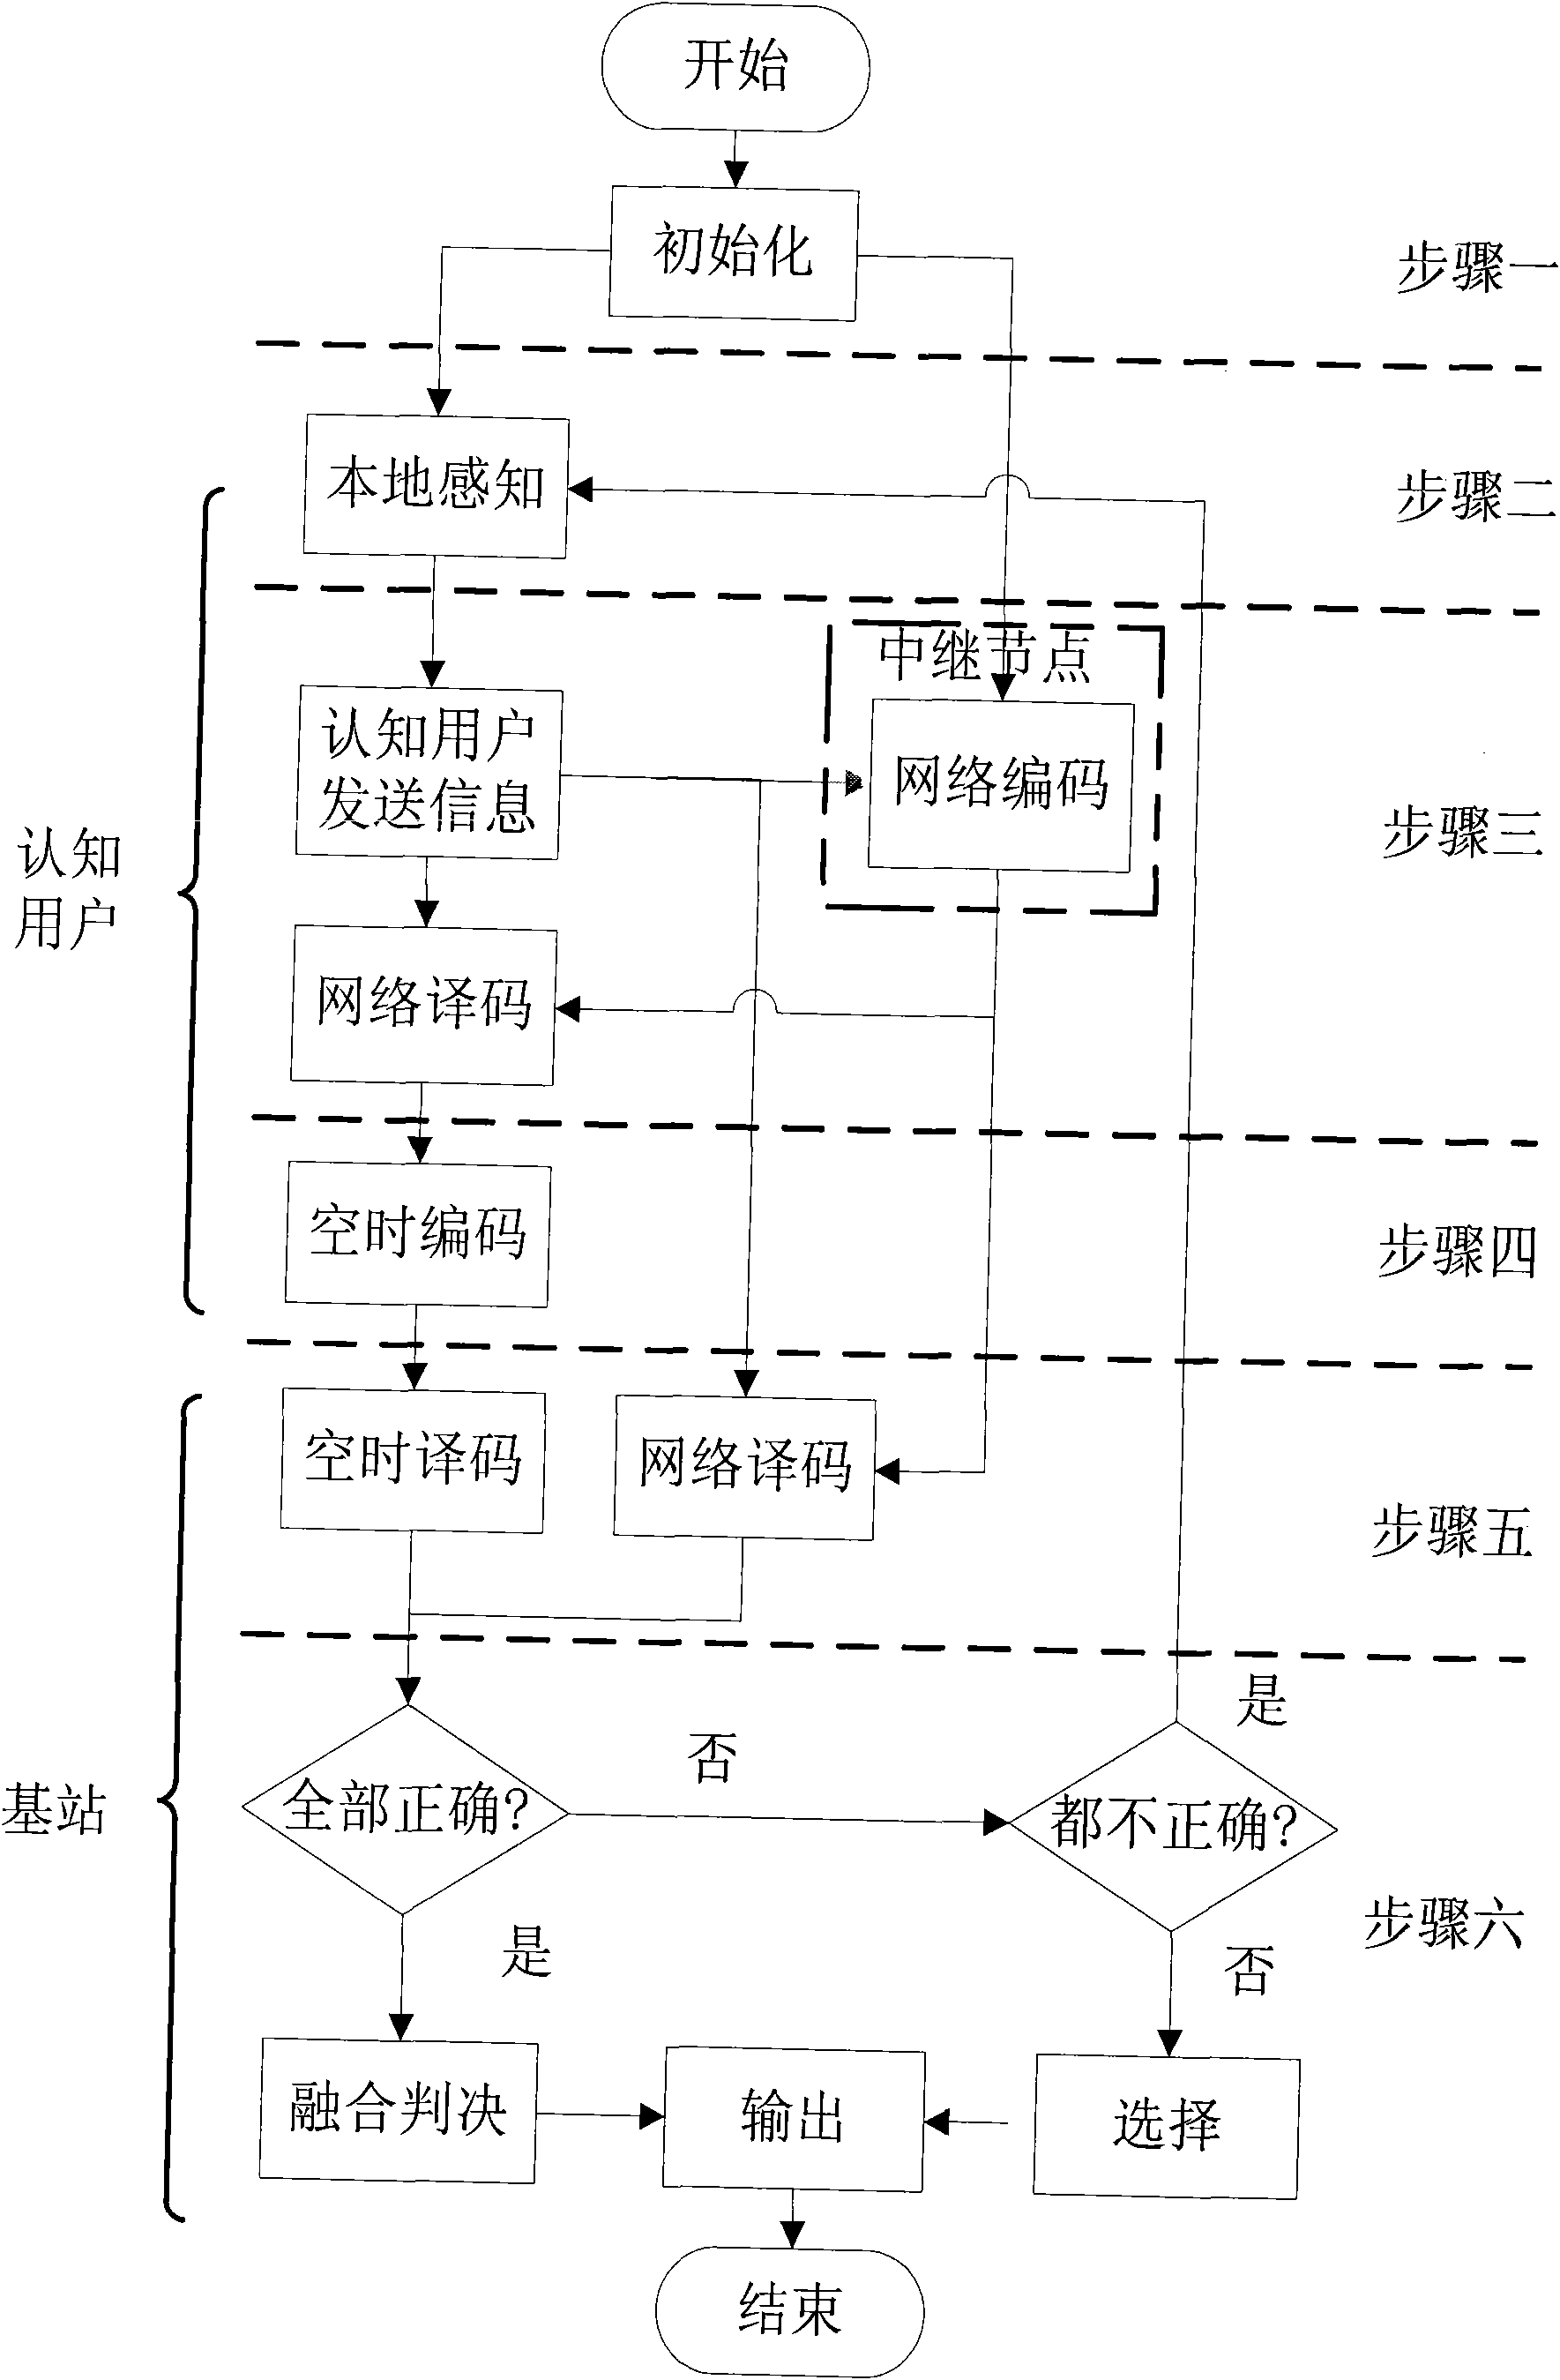 Cooperation spectrum sensing method based on network encoding